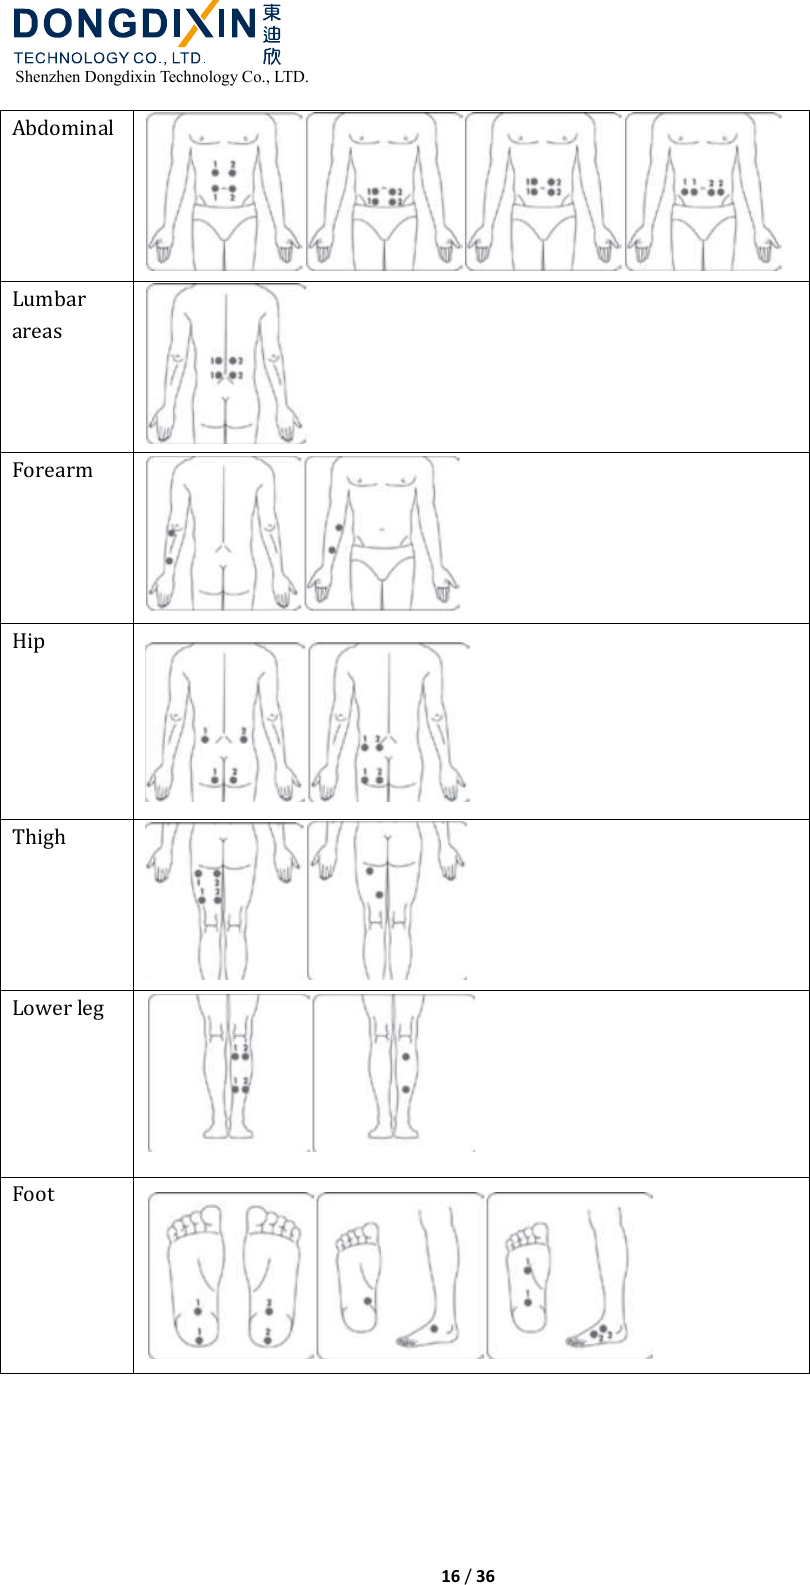  Shenzhen Dongdixin Technology Co., LTD.  16 / 36  Abdominal  Lumbar areas  Forearm  Hip  Thigh  Lower leg  Foot       